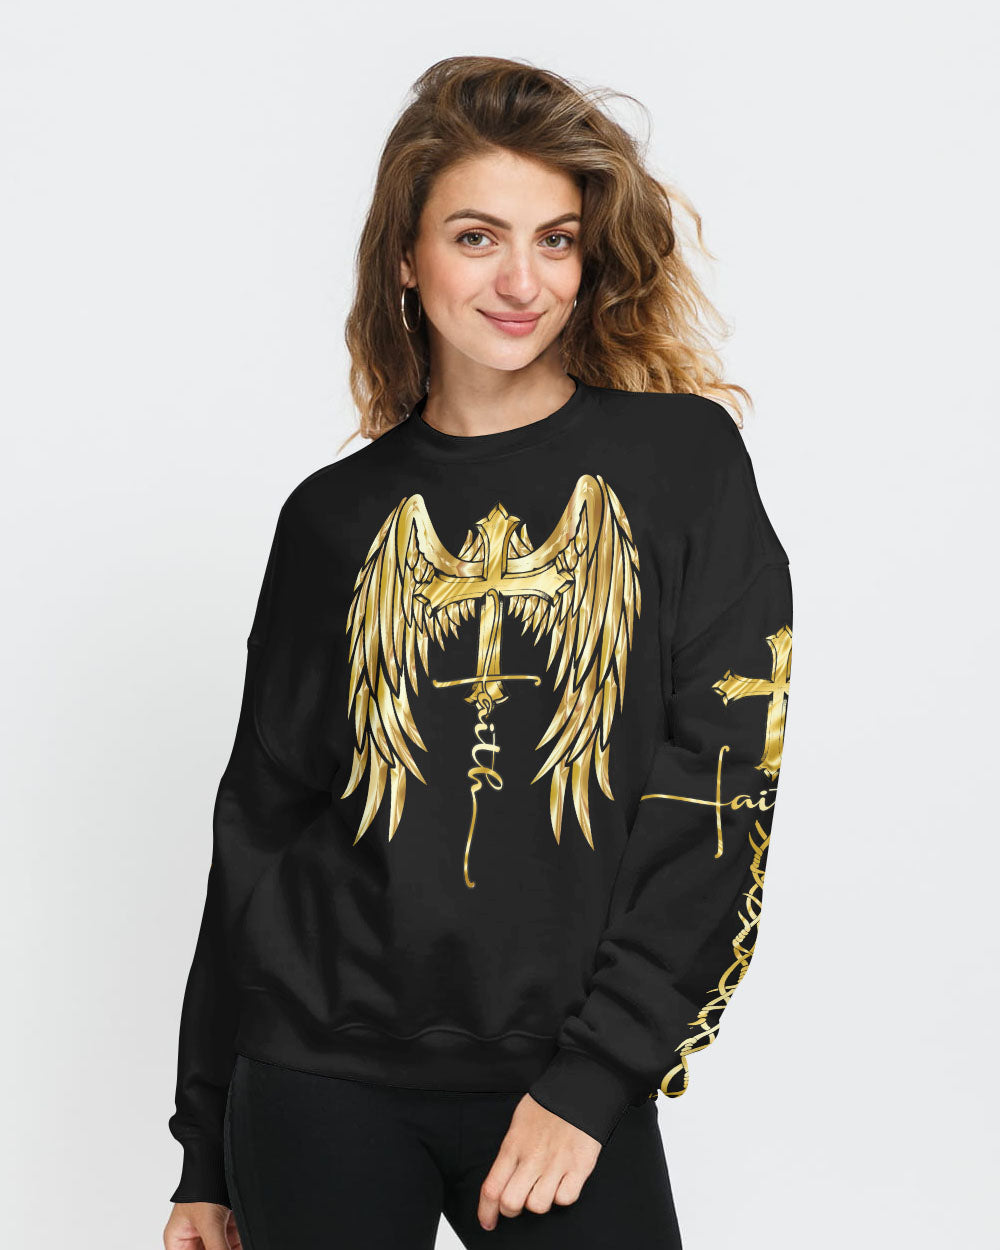 Gold Faith Wings Cross Women's Christian Sweatshirt